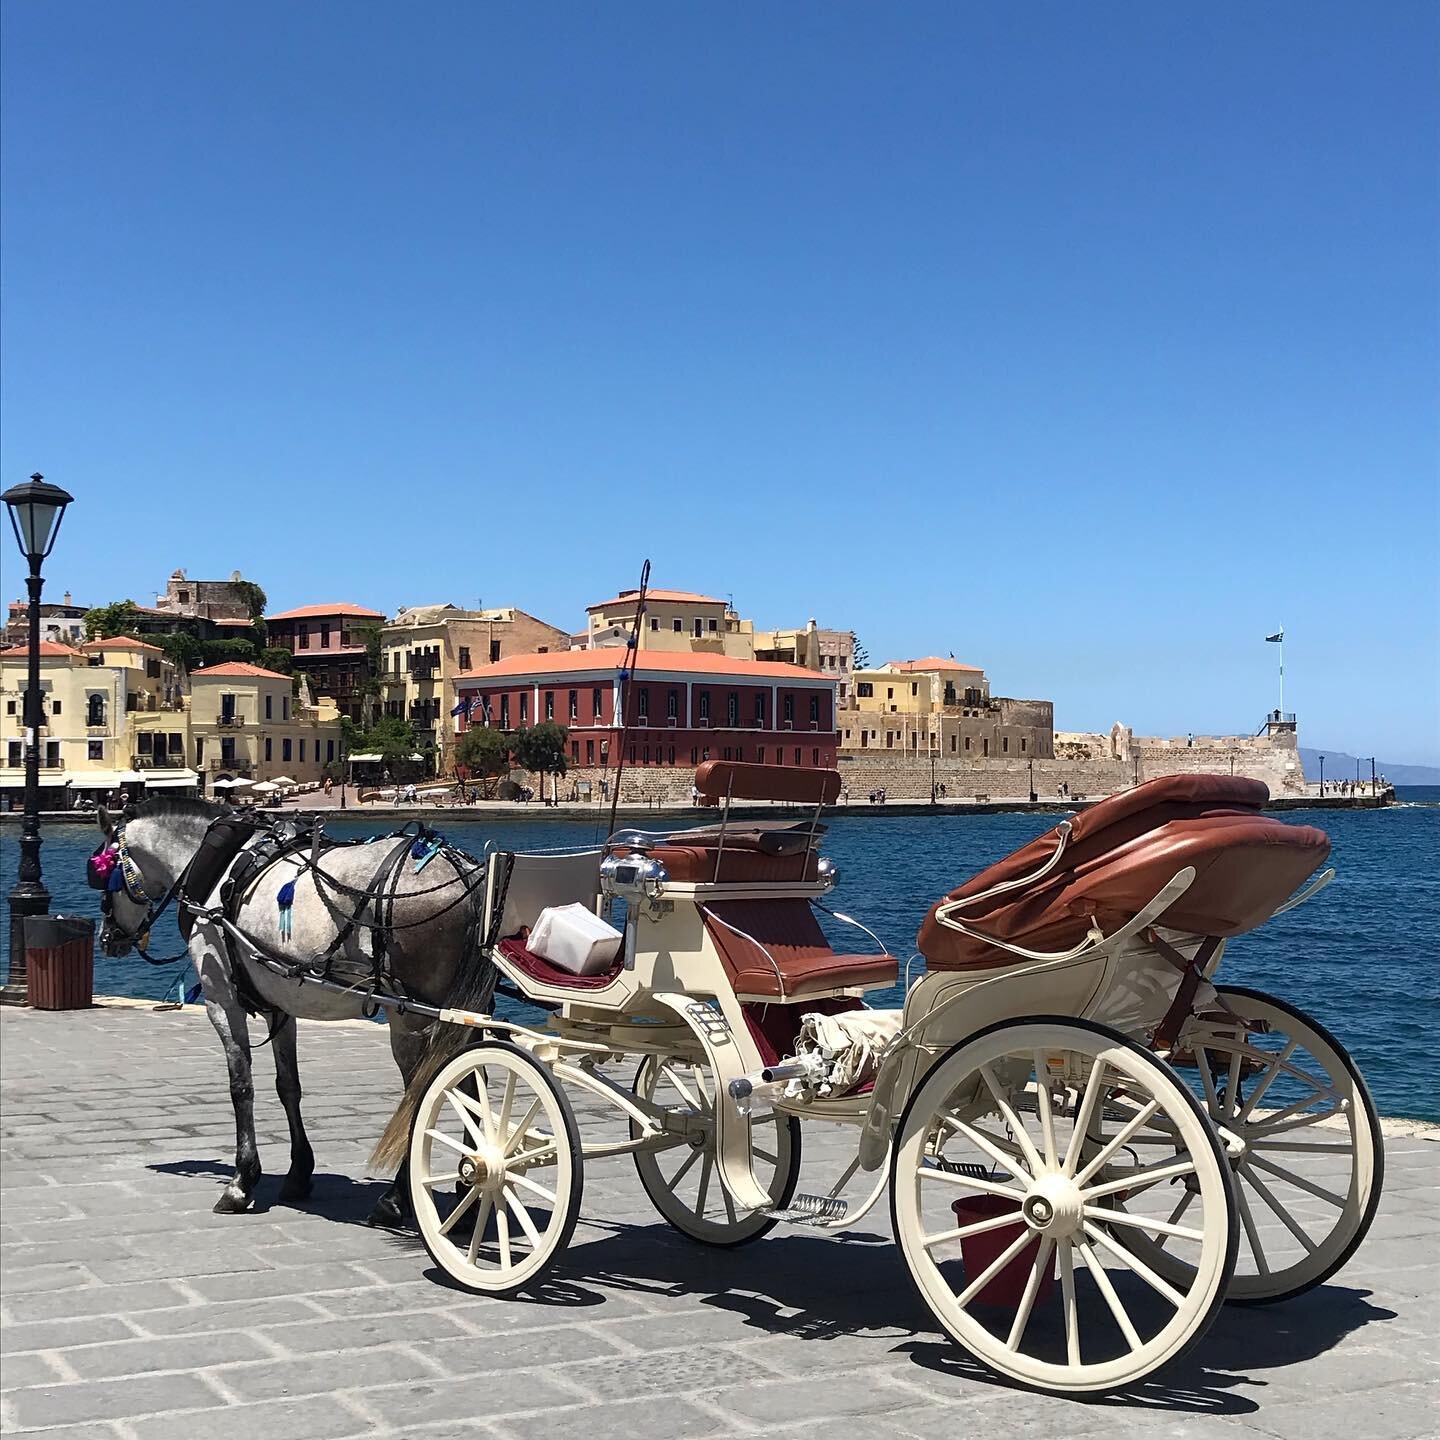 Don&rsquo;t miss this ride at the old Venetian harbor of Chania #visitgreece #visitcrete #greece🇬🇷 #chaniaoldtown #summer #vacation #beauty #sea #sun #island #rentavillaingreece #happy #happyvillachaniacrete